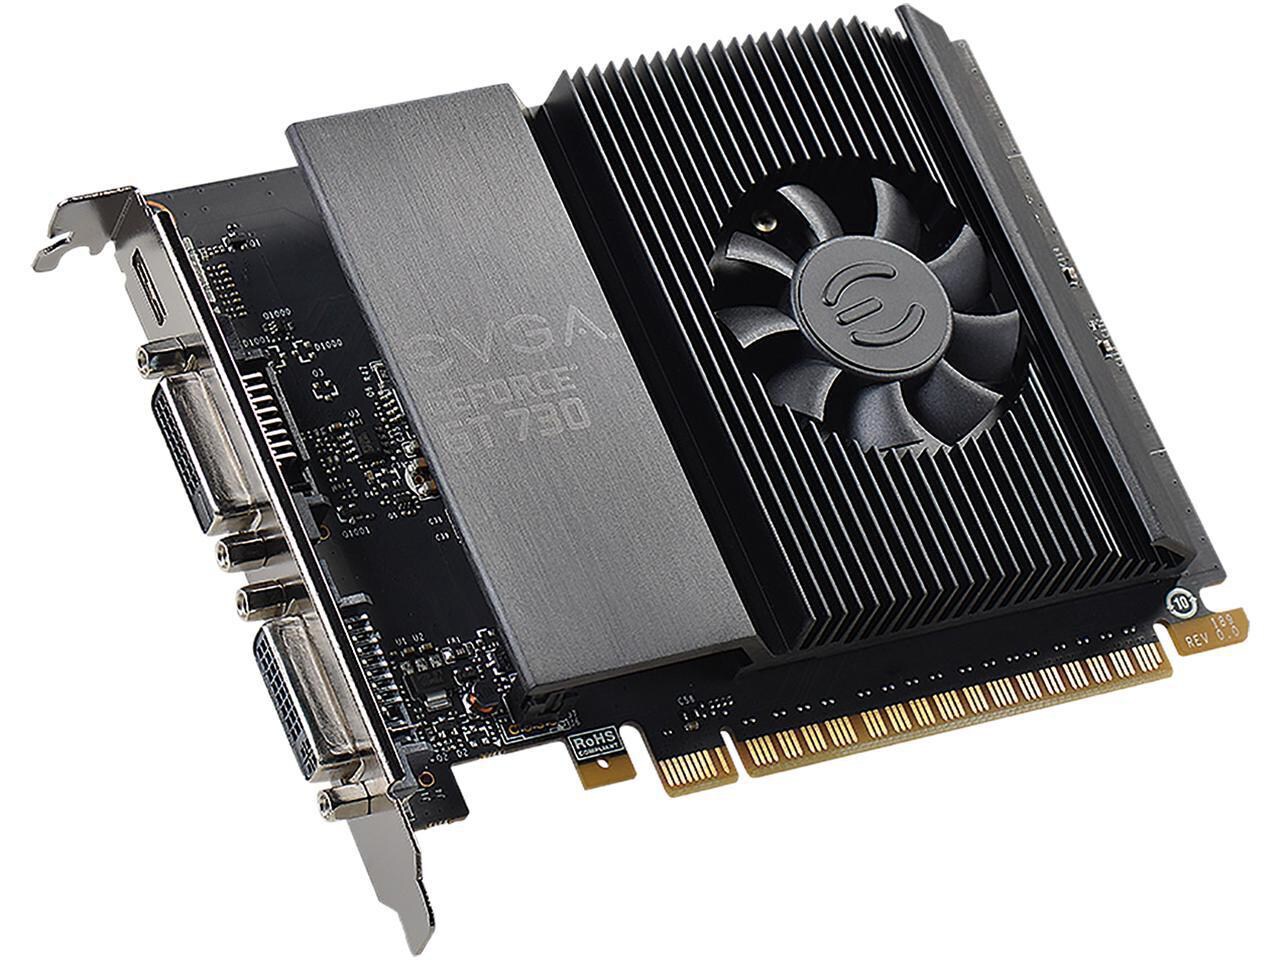 EVGA GeForce GT 730 4GB GDDR5 PCI Express Video Card